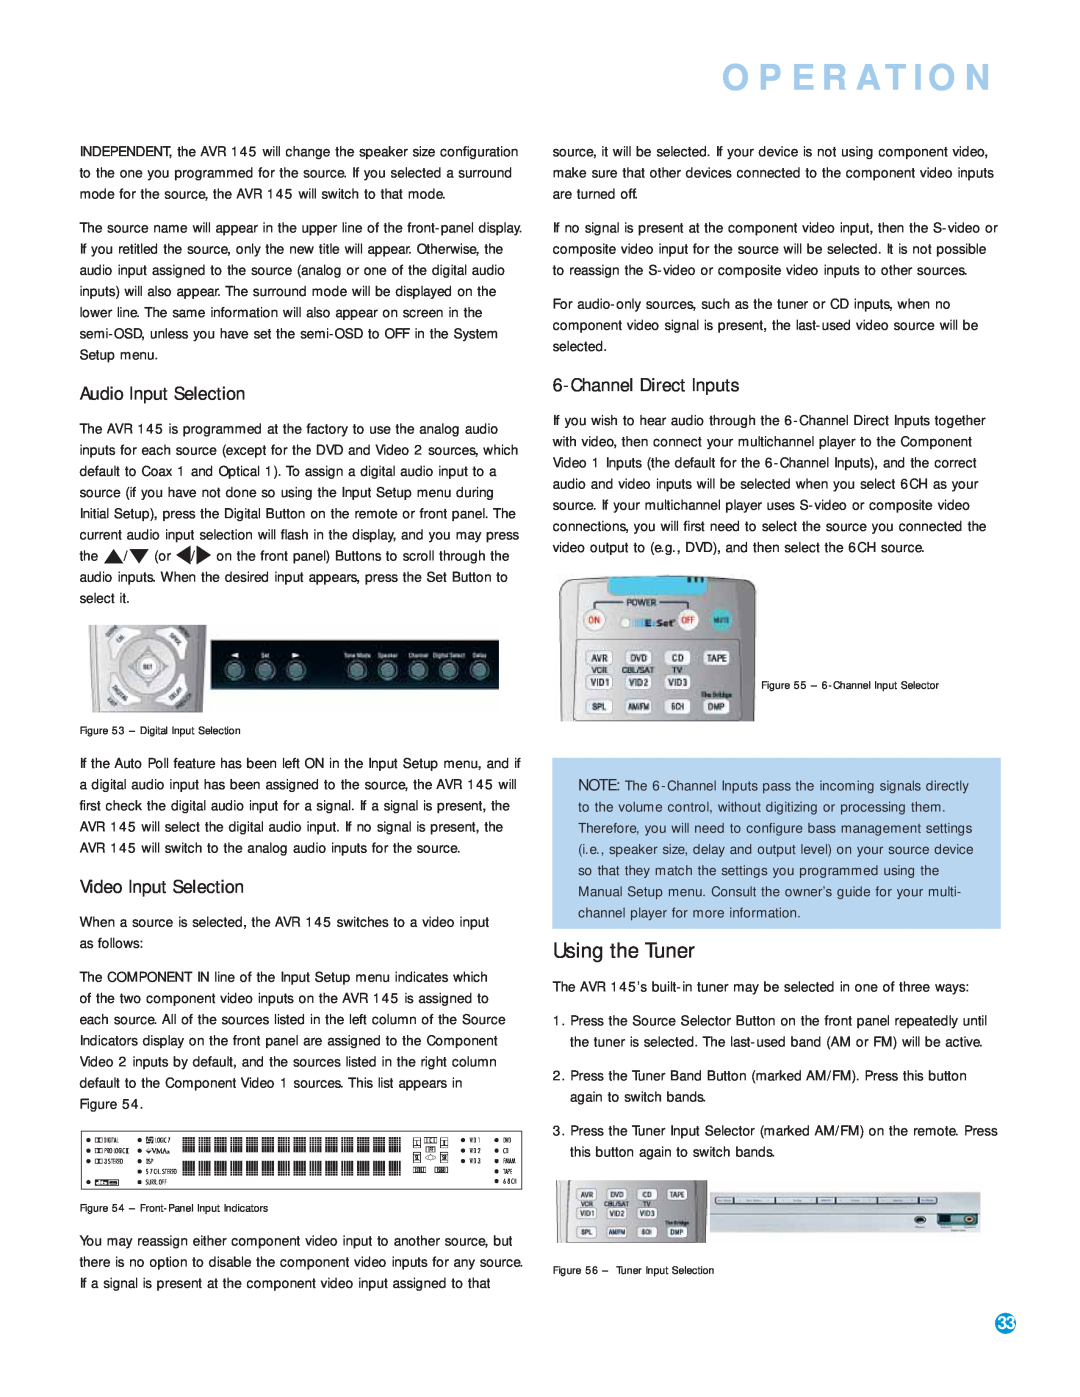 Harman-Kardon AVR 145 Using the Tuner, Operation, Audio Input Selection, Video Input Selection, ChannelDirect Inputs 